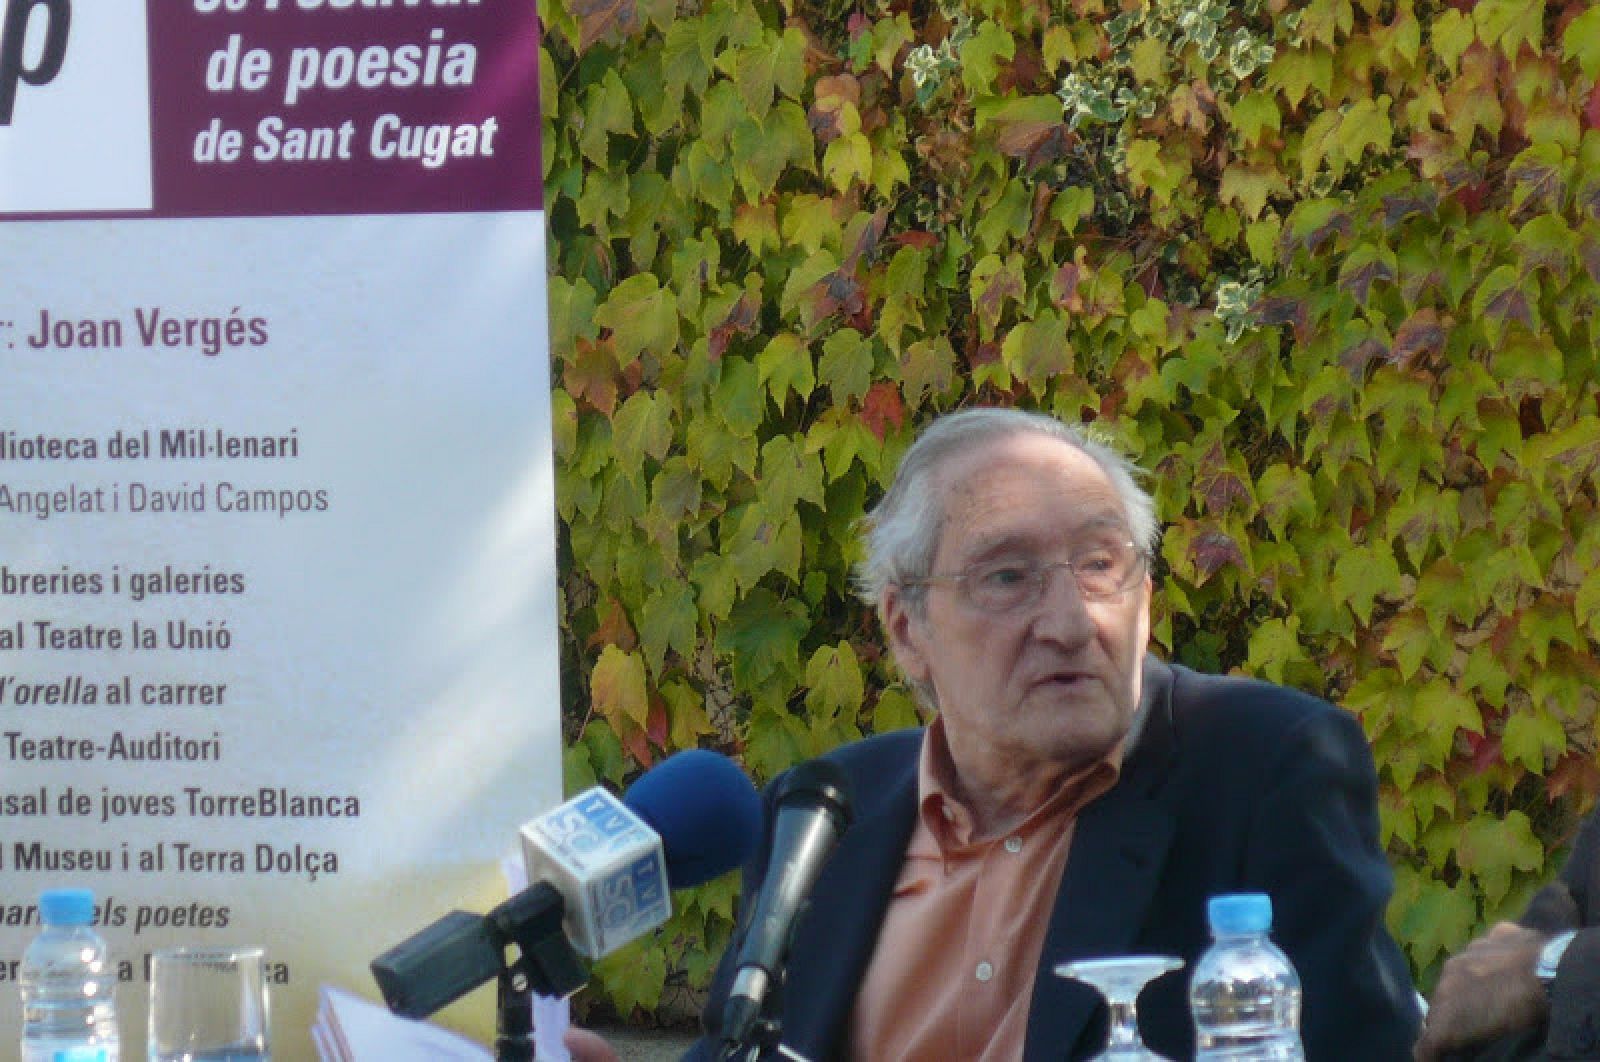 El poeta Joan Vergés en un acto poético en Sant Cugat del Vallés.